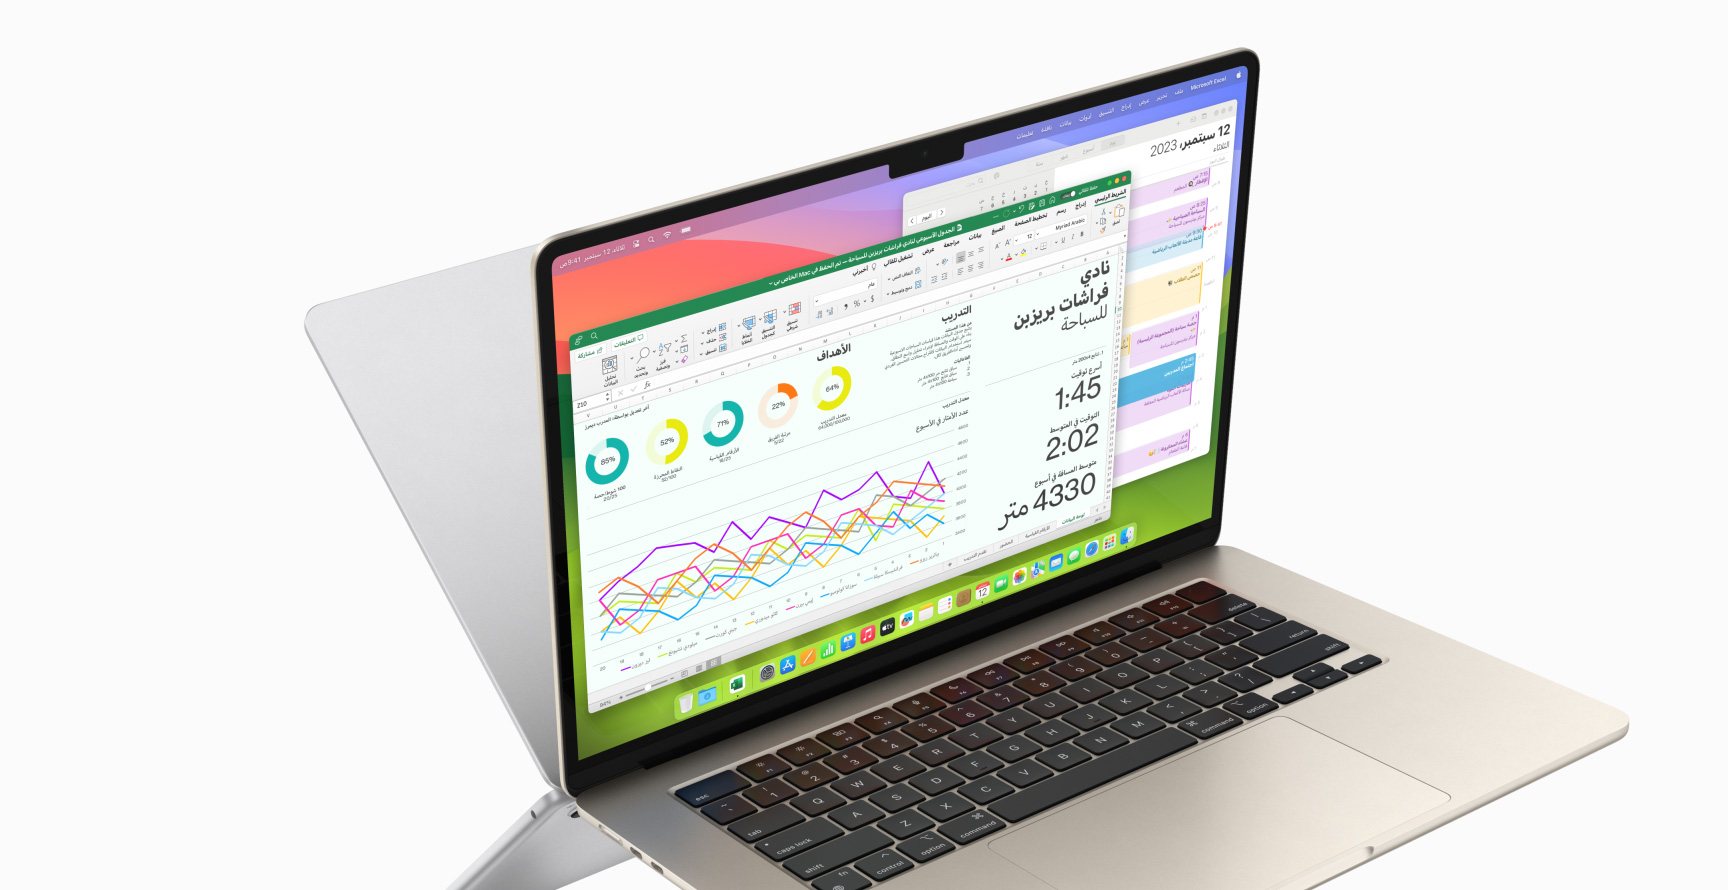 Calendar and Microsoft Excel running on MacBook Air.